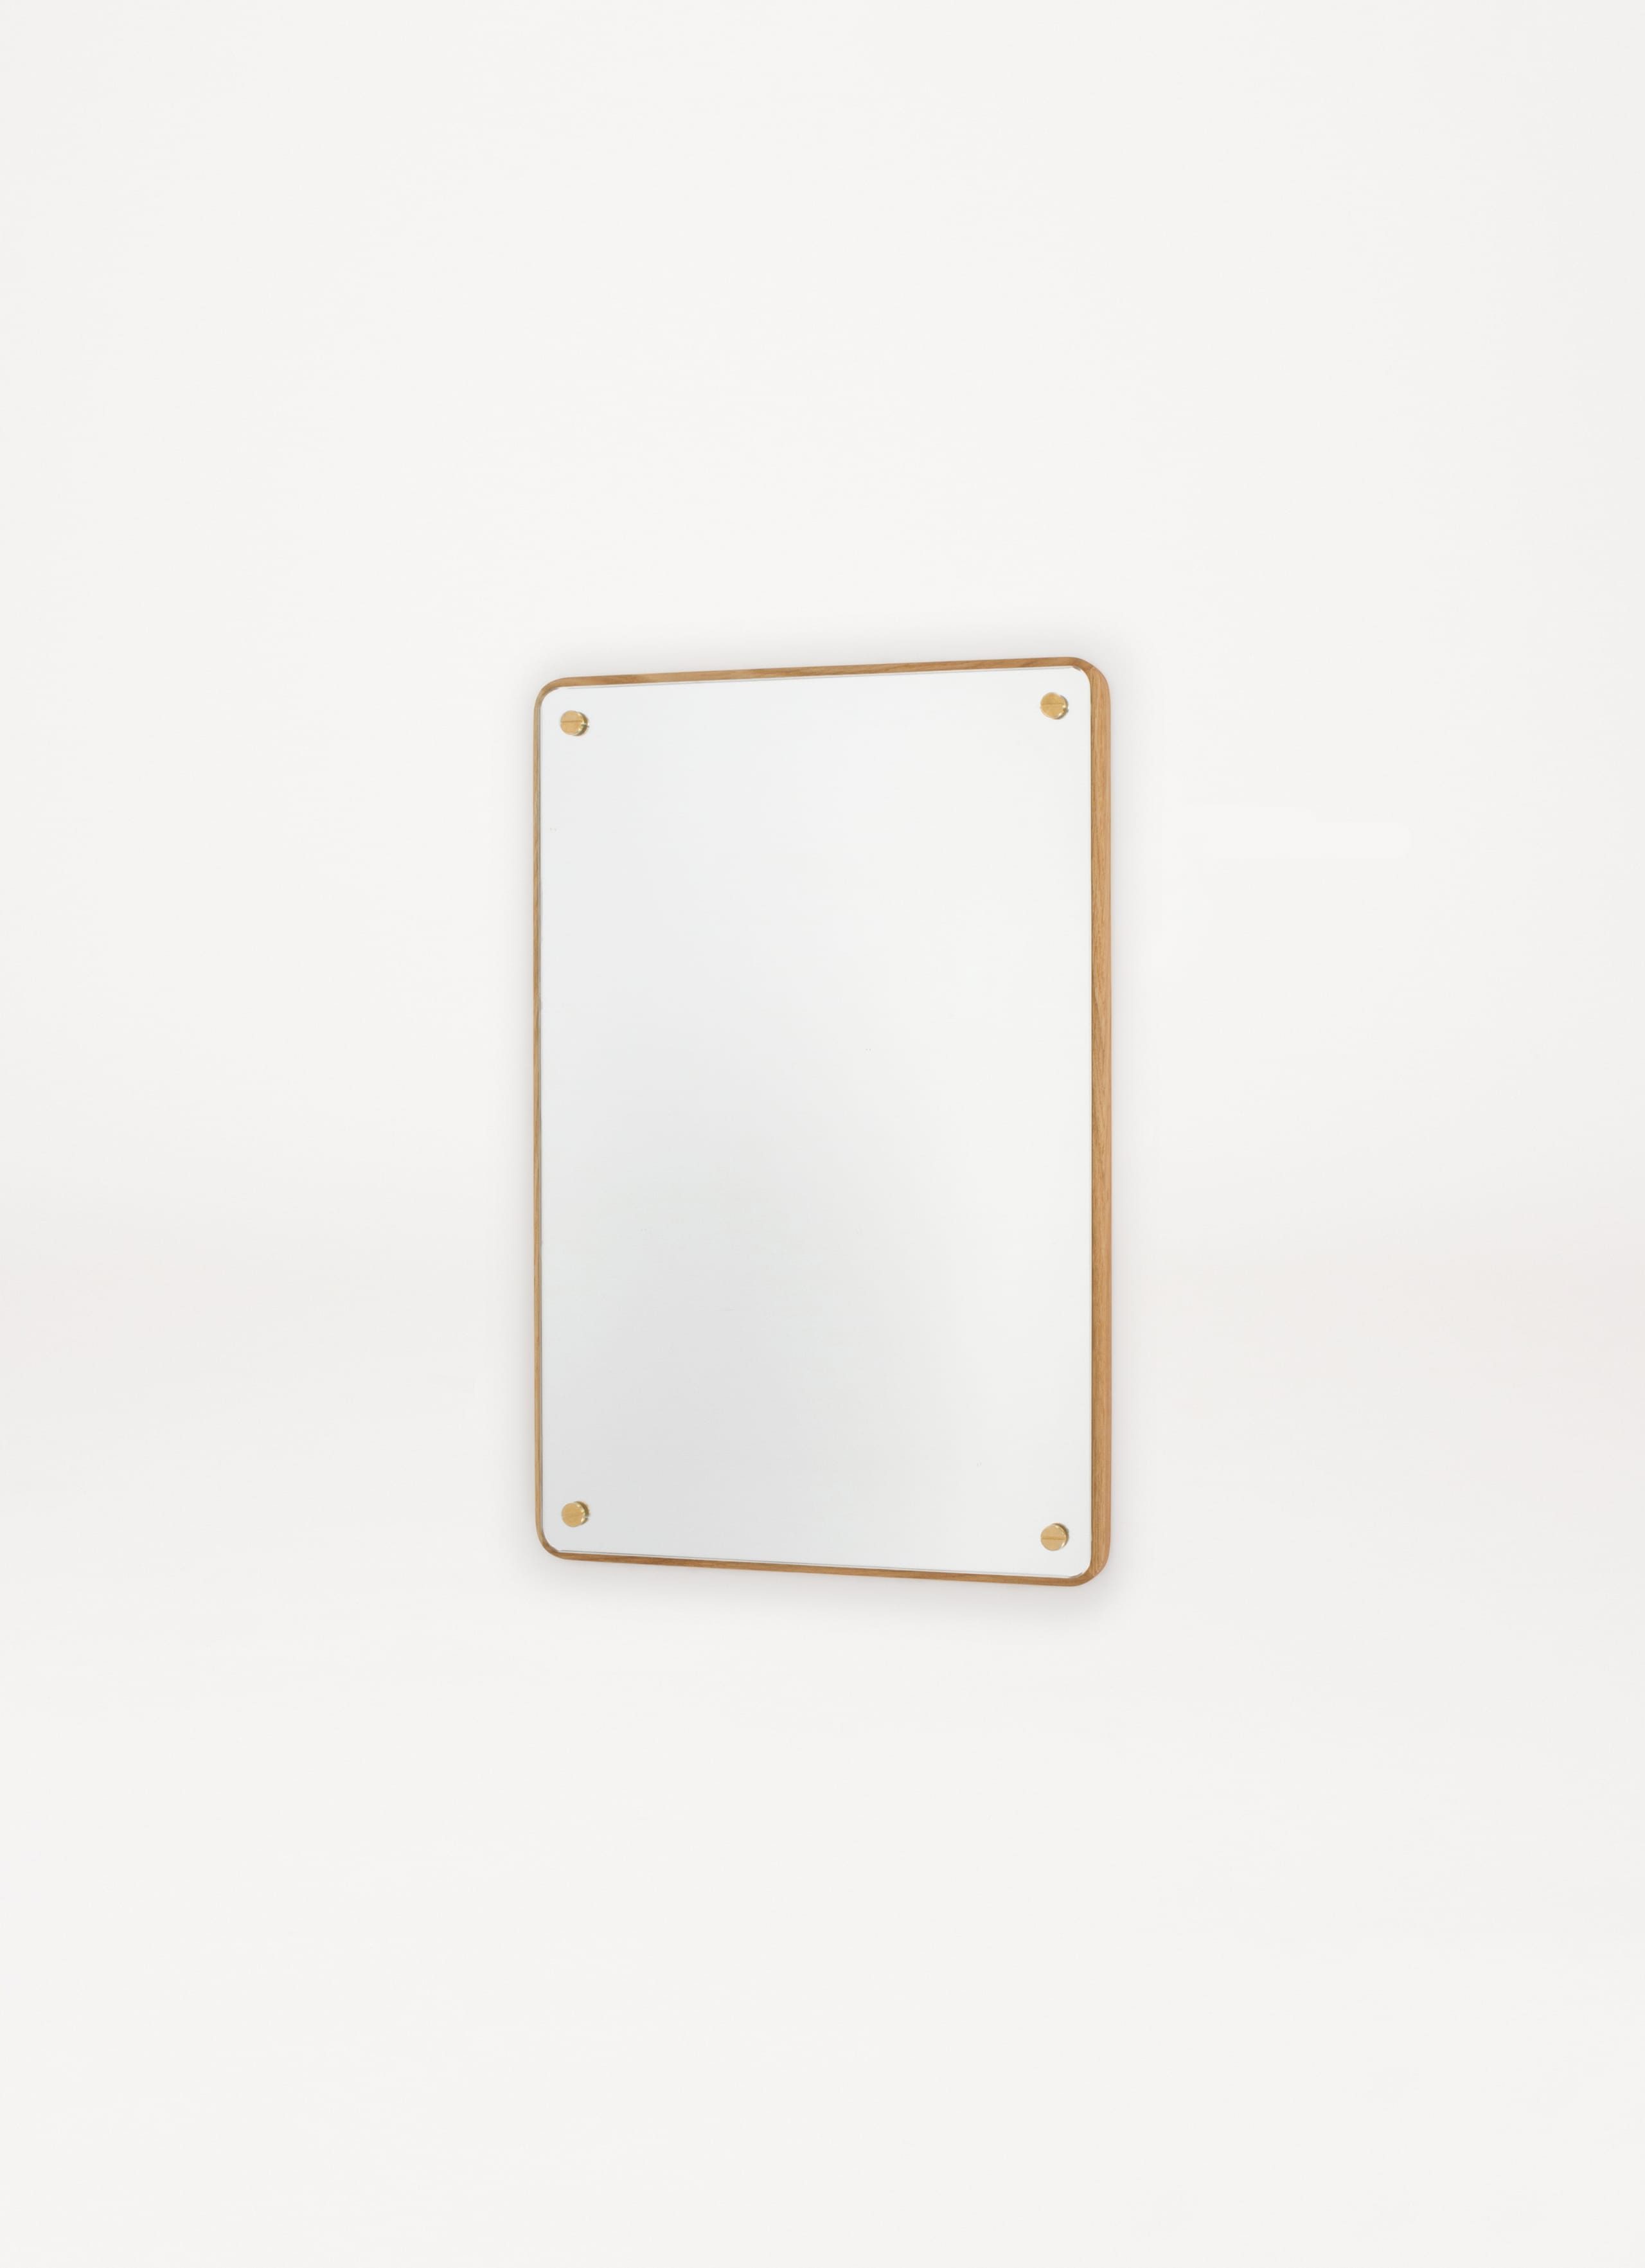 Frama - RM 1 - Rectangular Mirror - Small